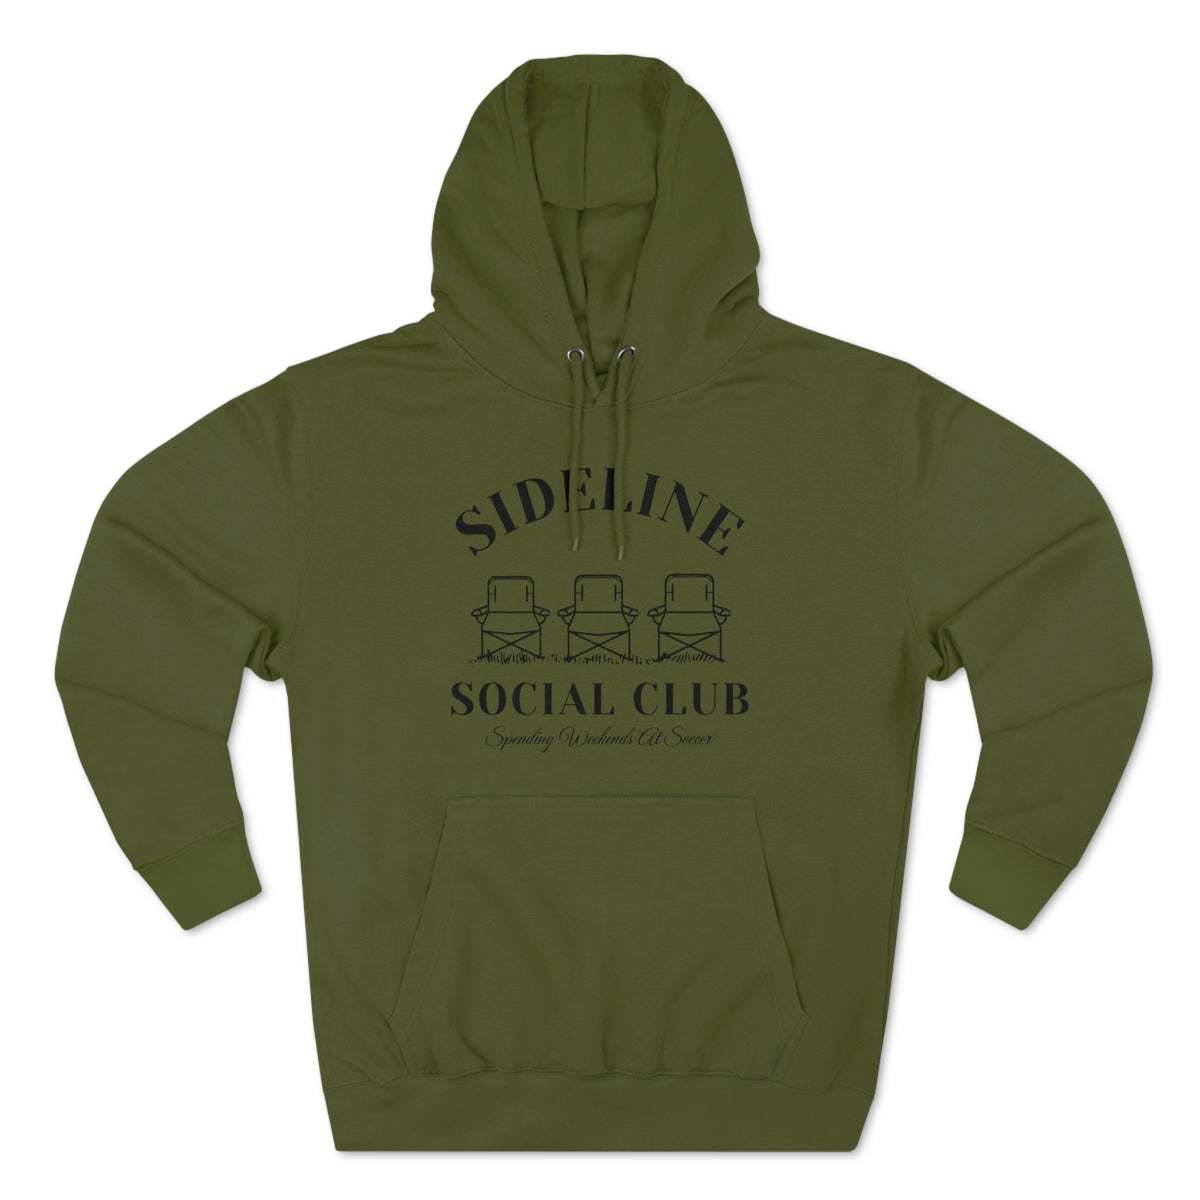 Sideline Social Club Adult Hooded Sweatshirt